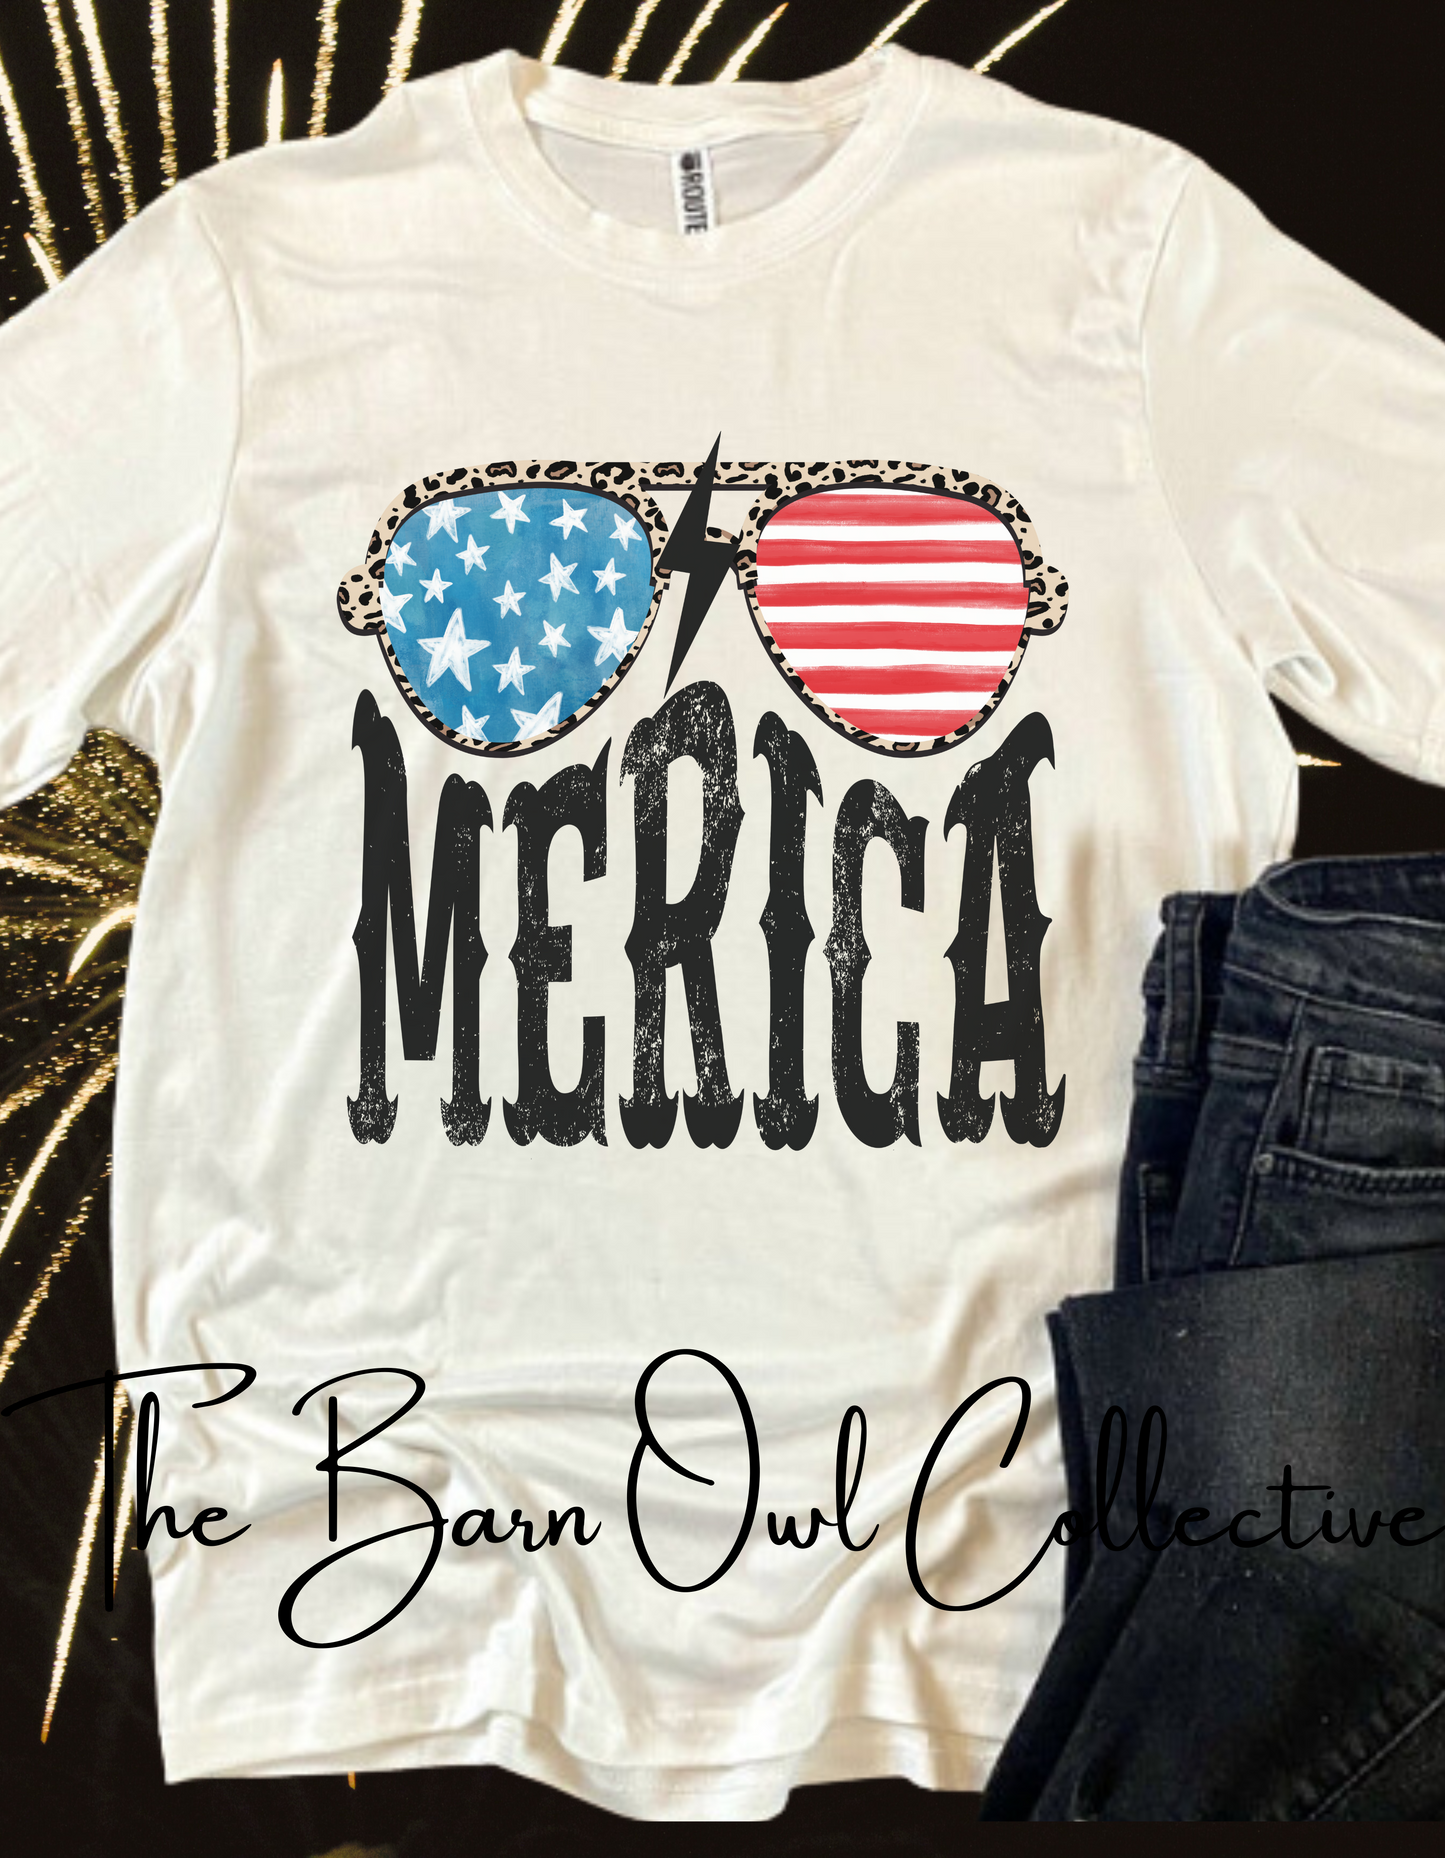 Merica Rocker Vintage Graphic T-Shirt